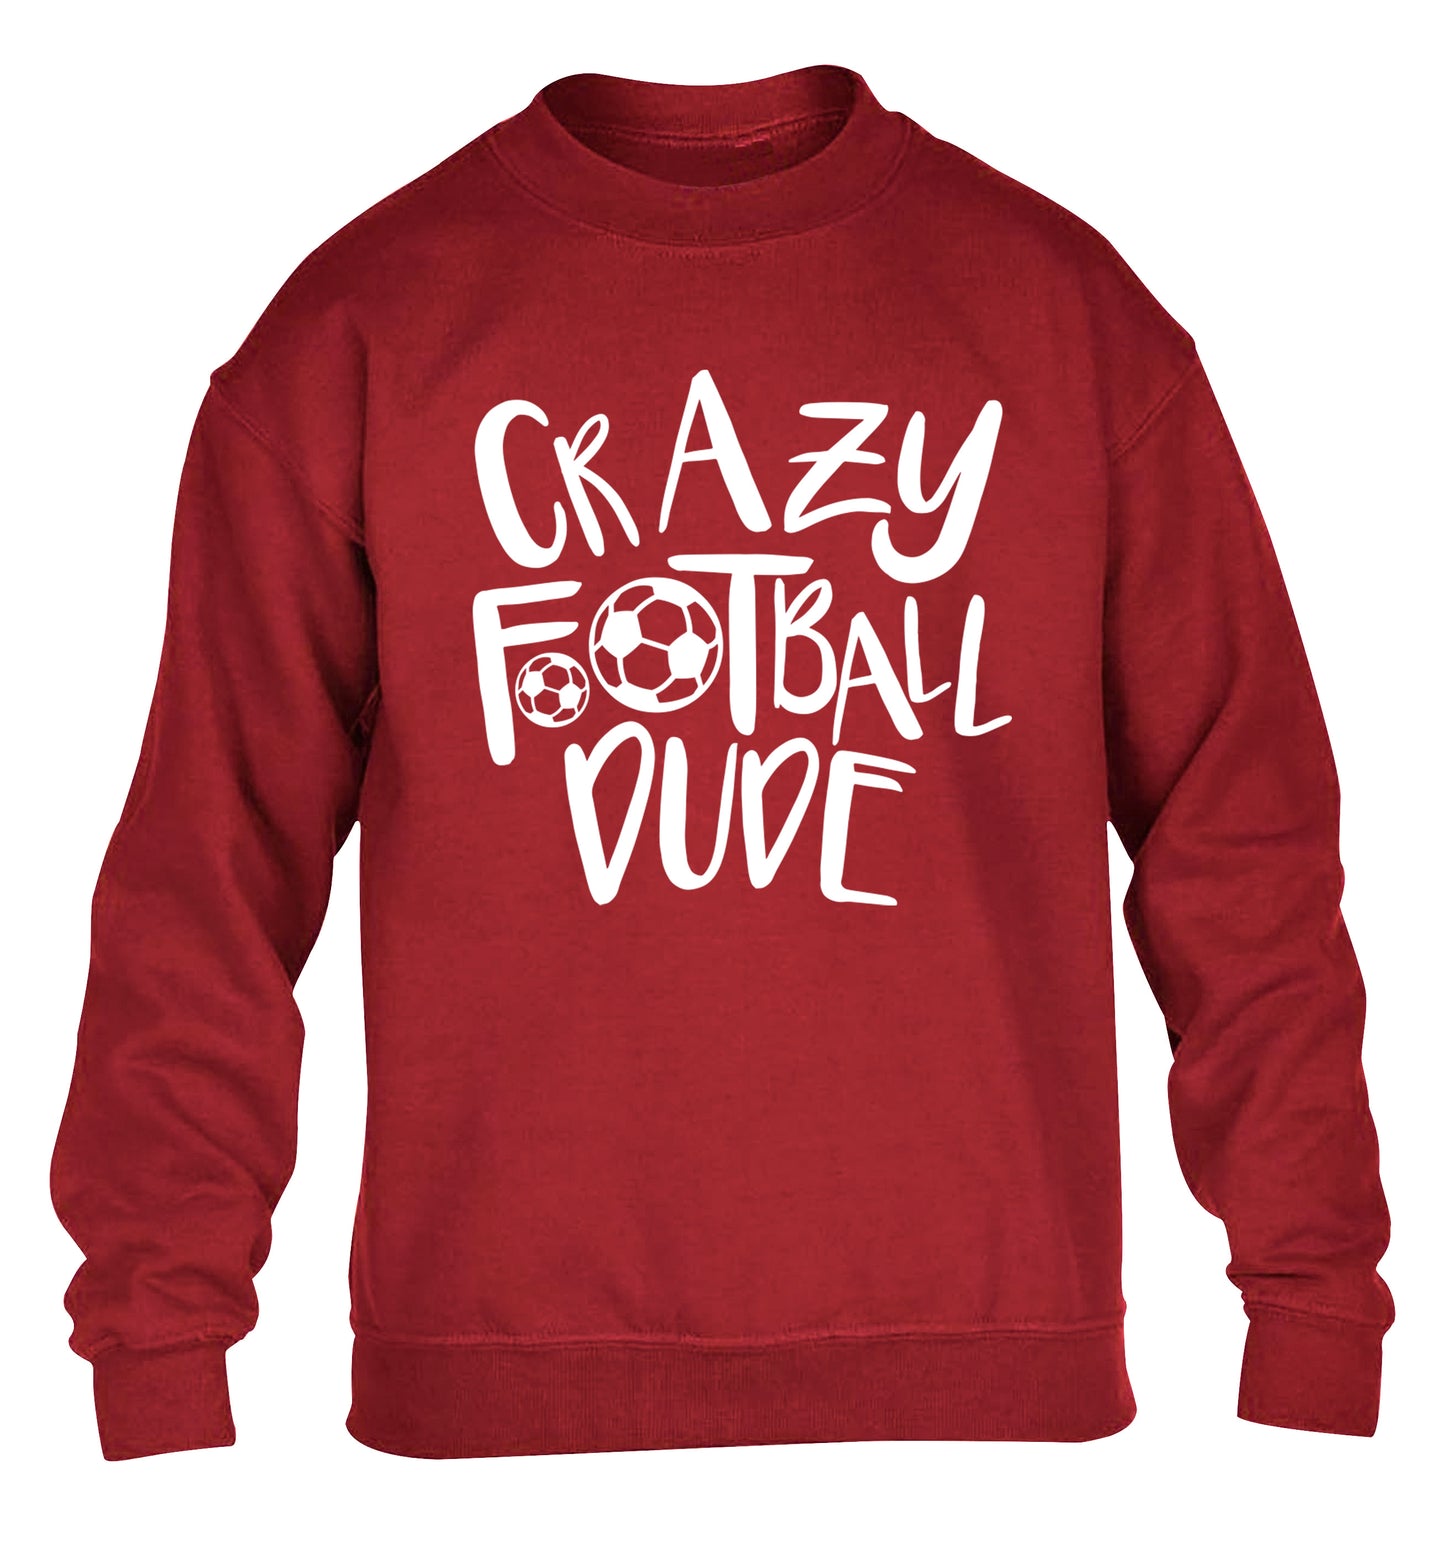 Crazy football dude children's grey sweater 12-14 Years